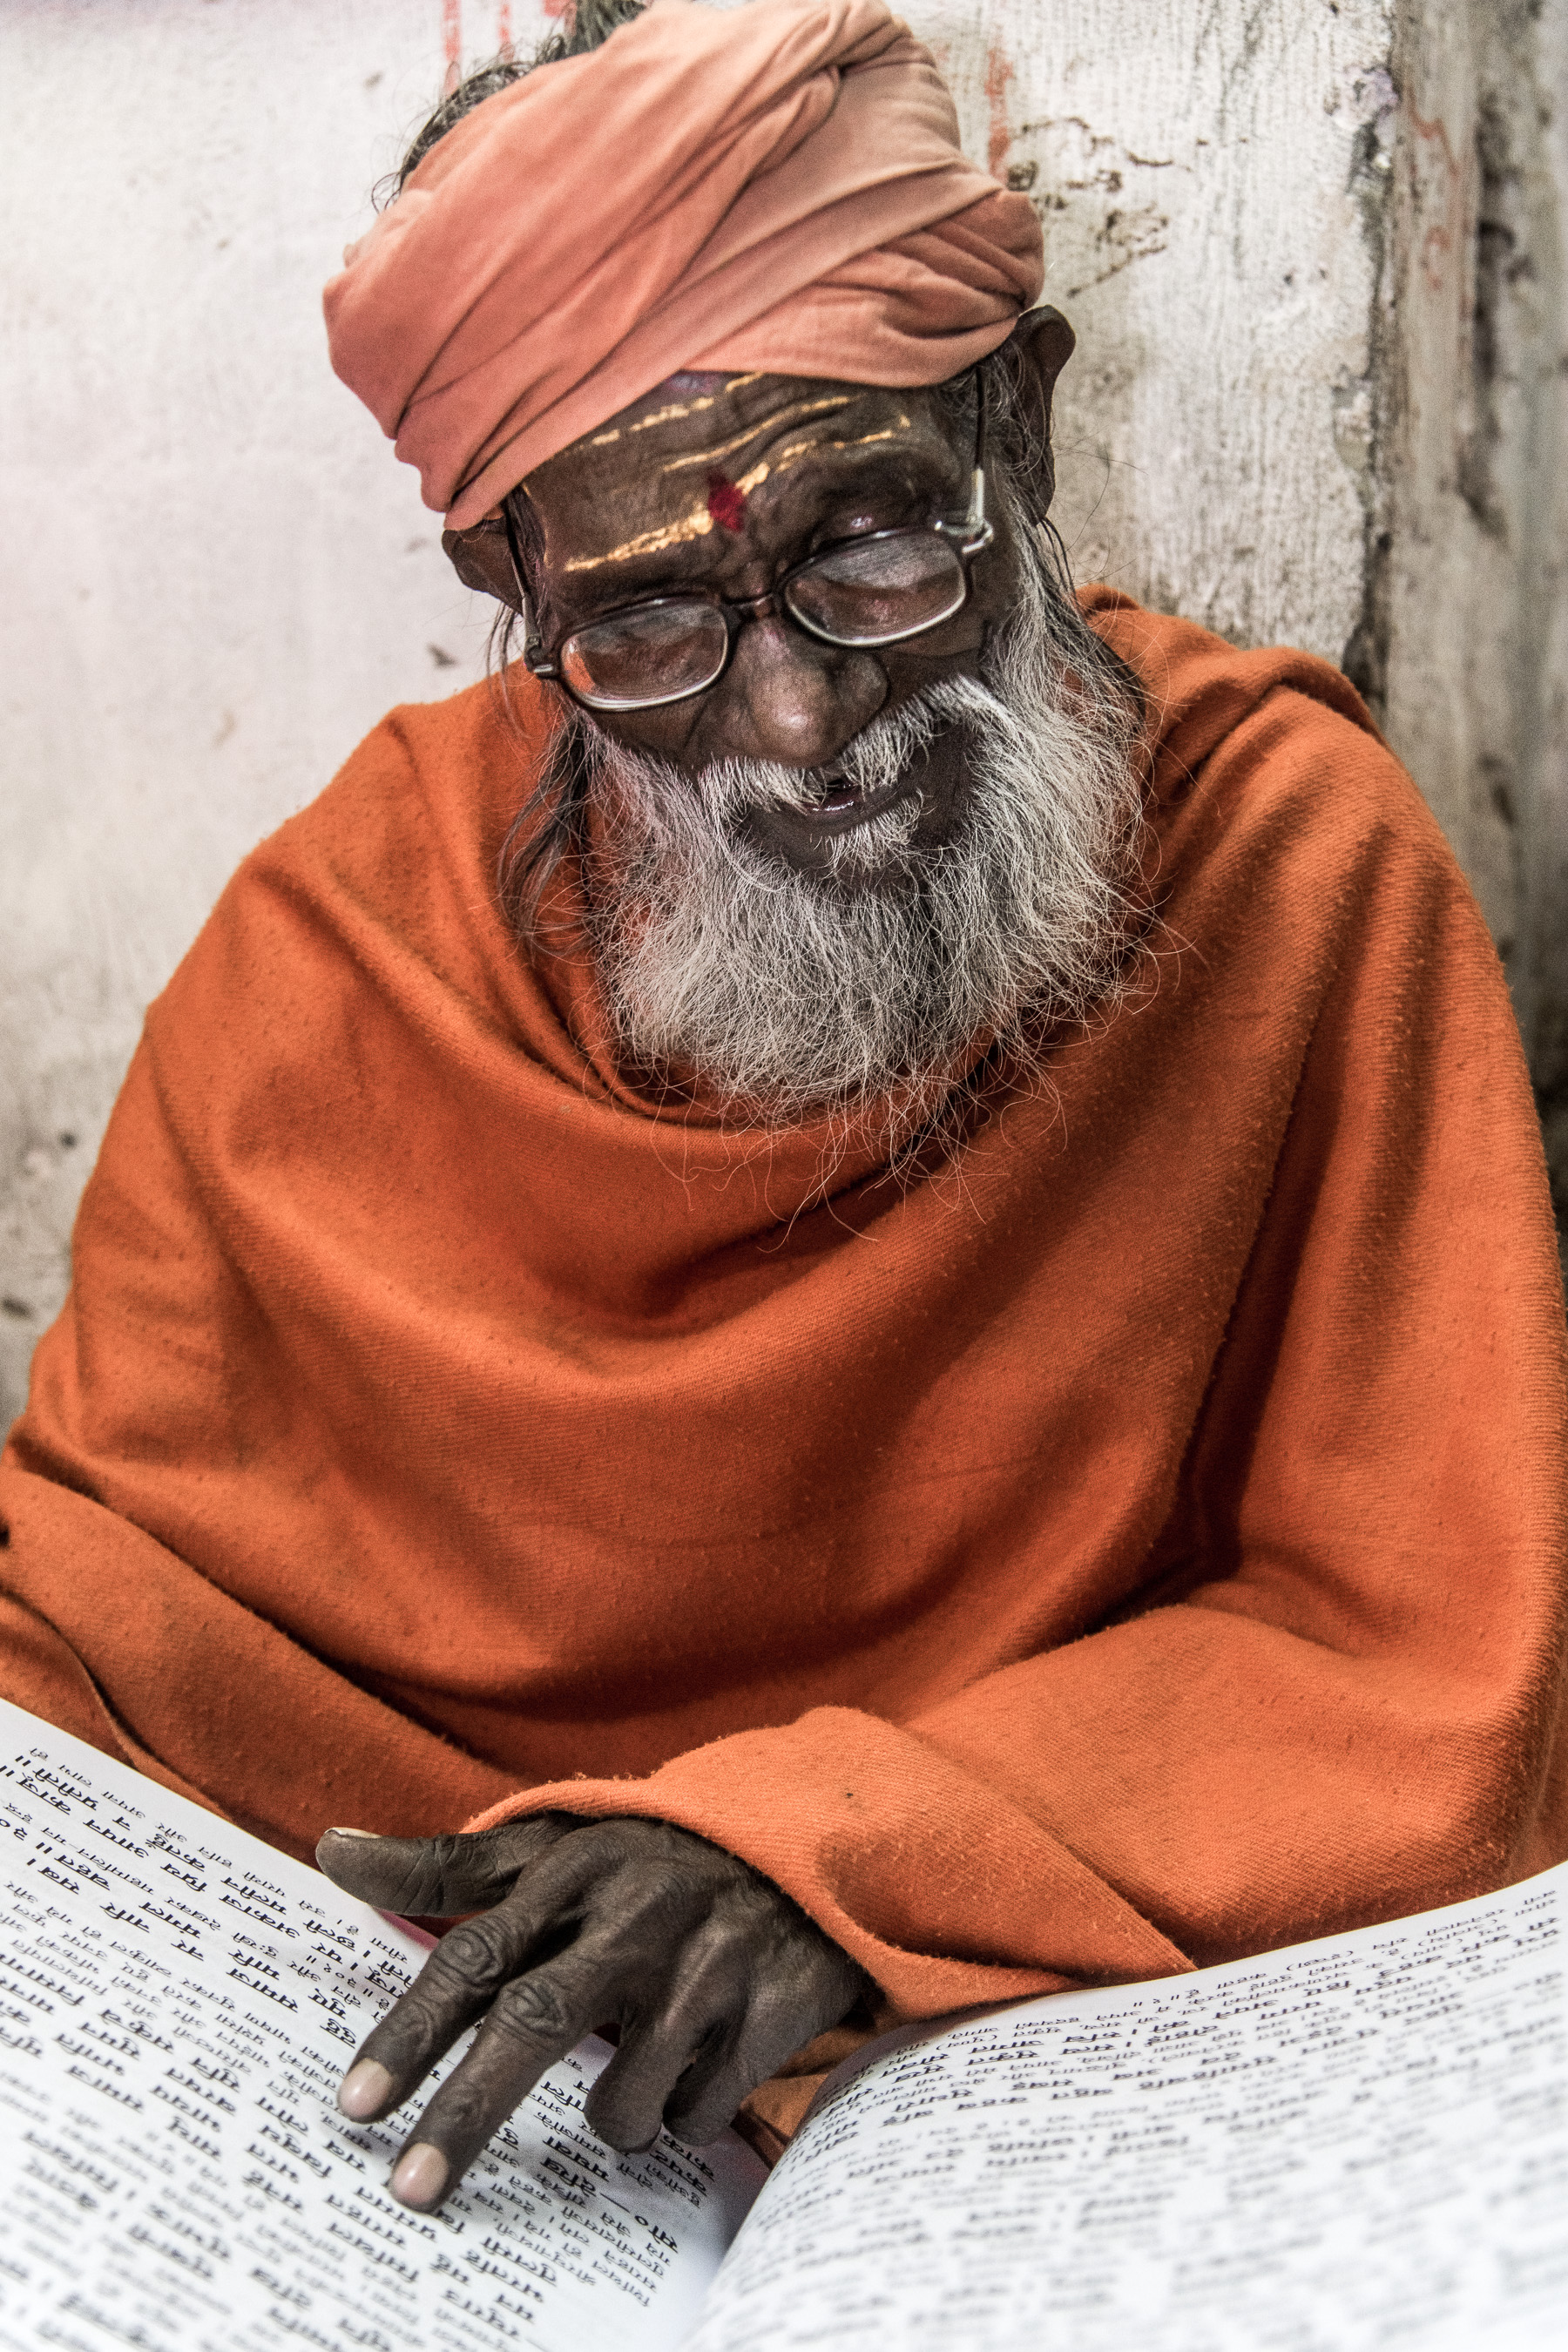 La Kumbha Mela de Prayagraj 2019 en Inde par Alexandre Sattler